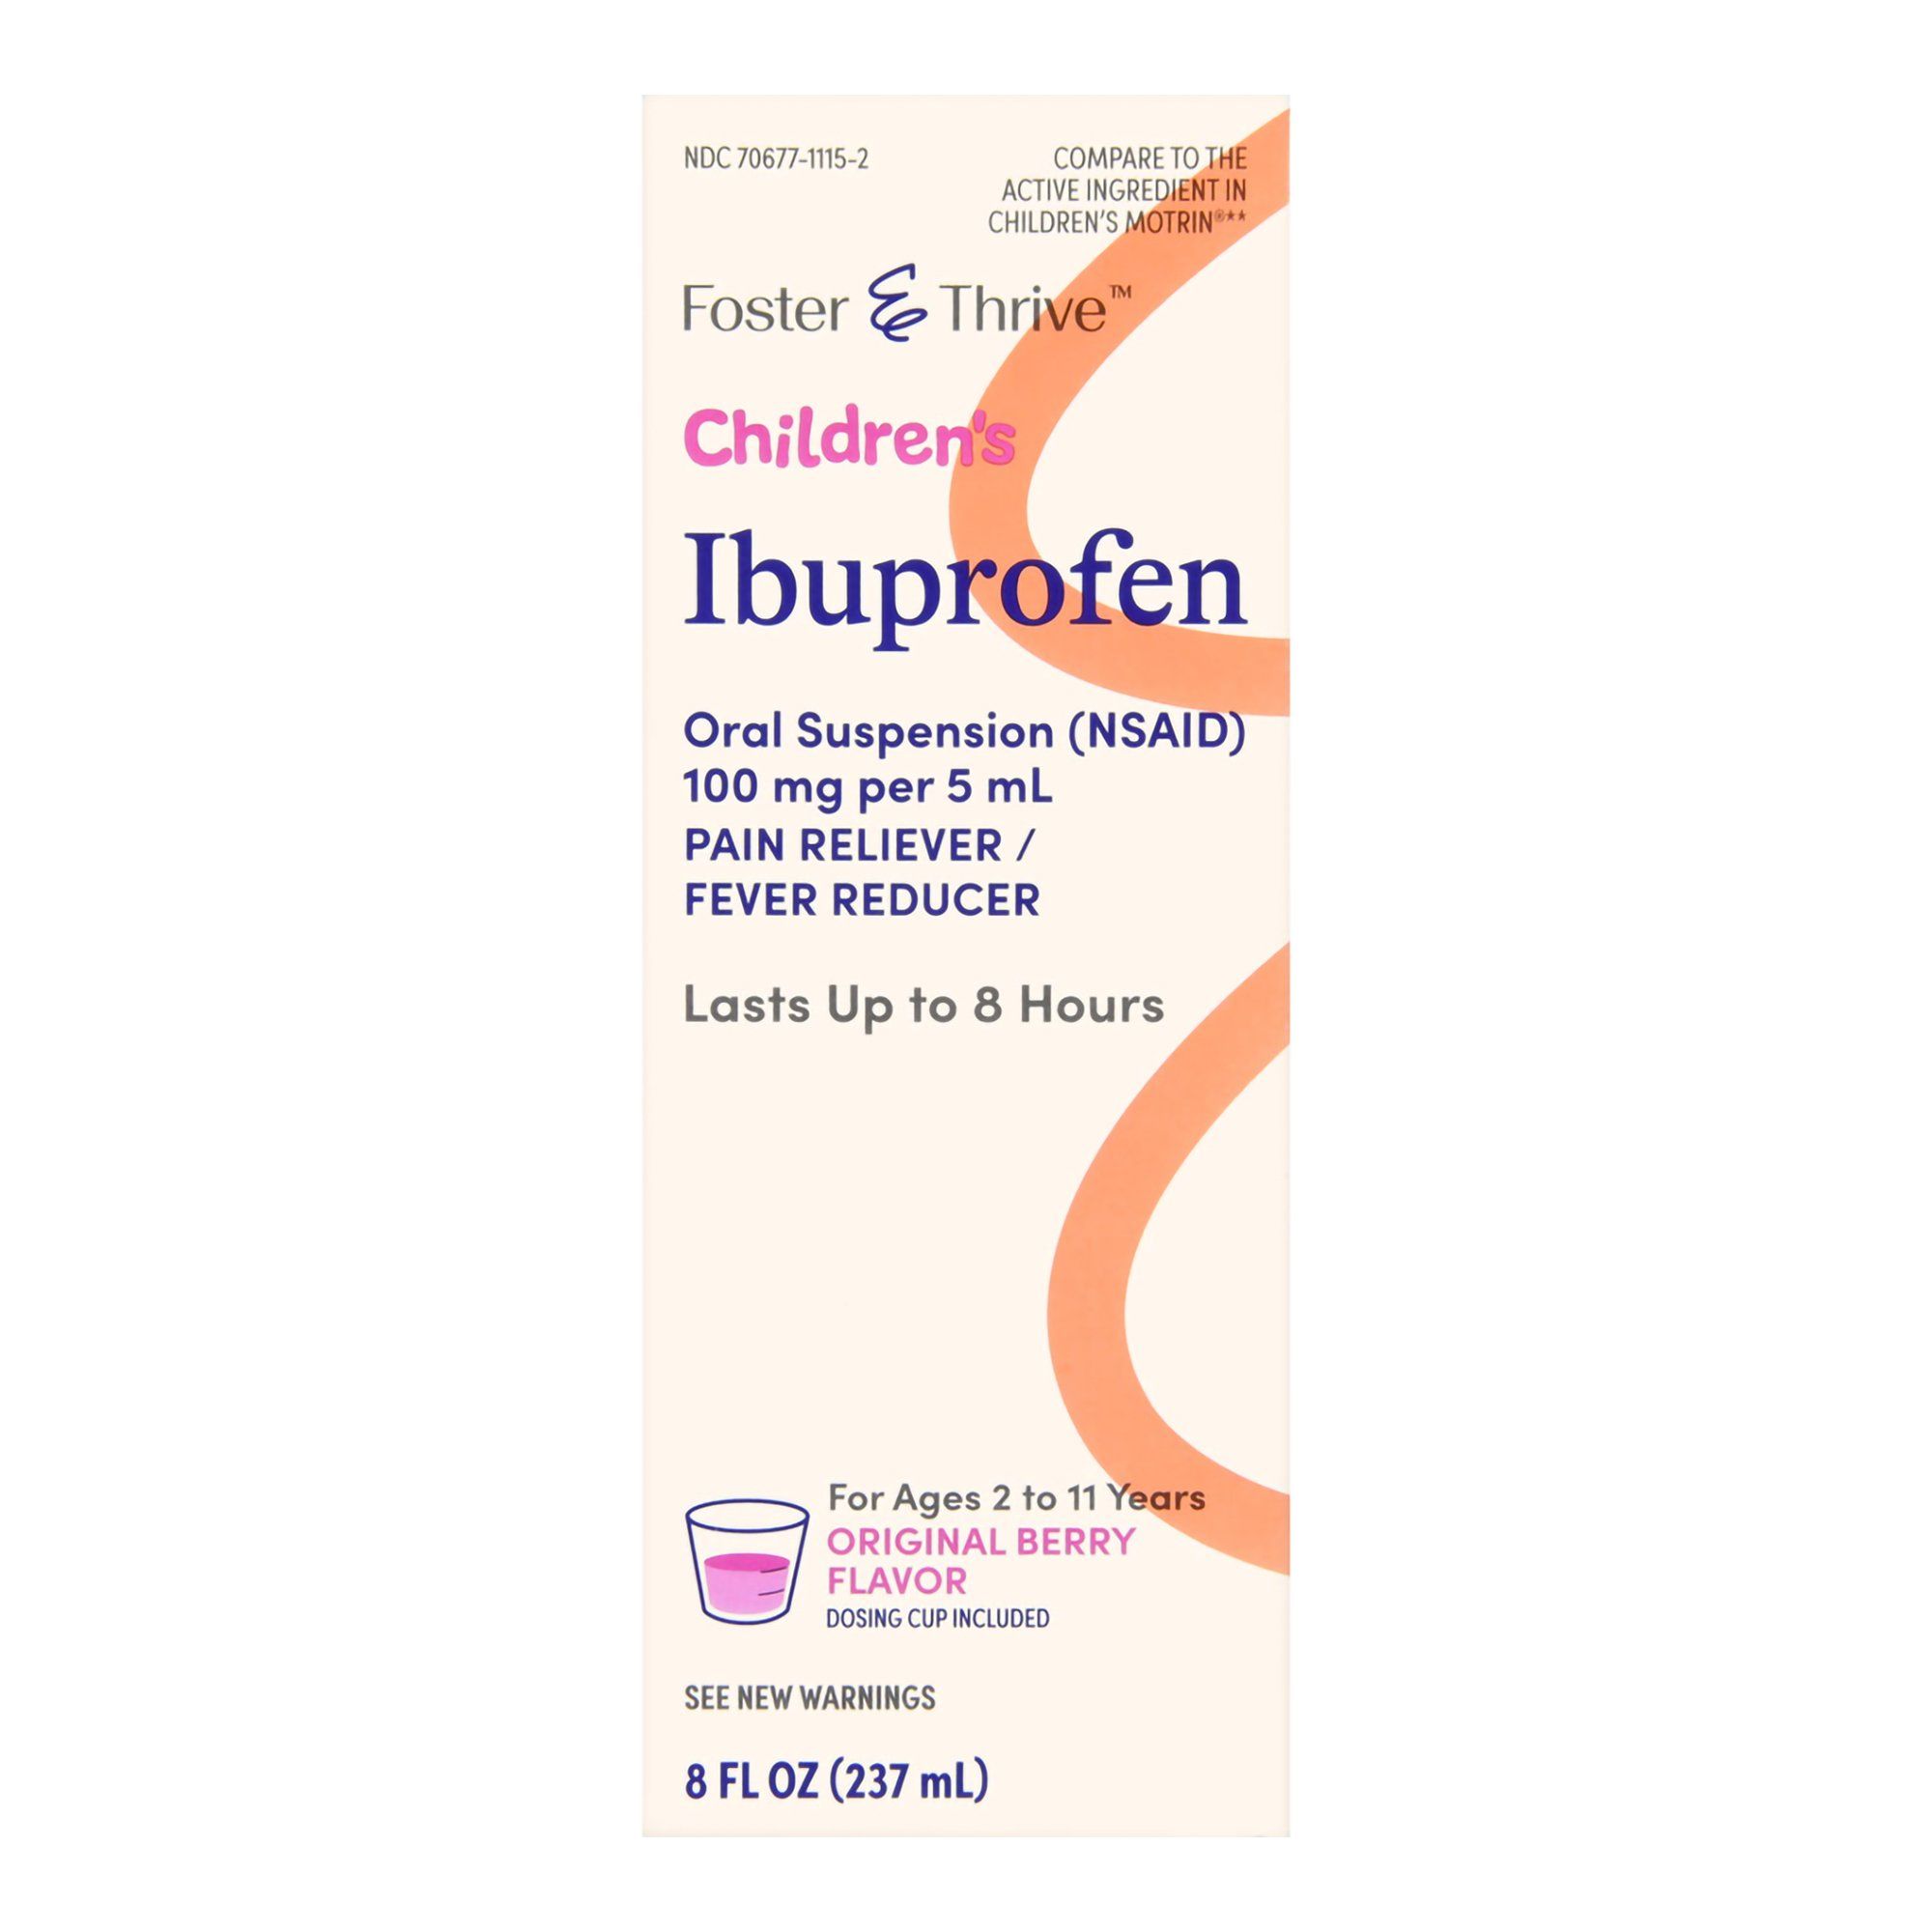 Foster & Thrive Children's Ibuprofen, 100 mg, Original Berry - 8 fl oz